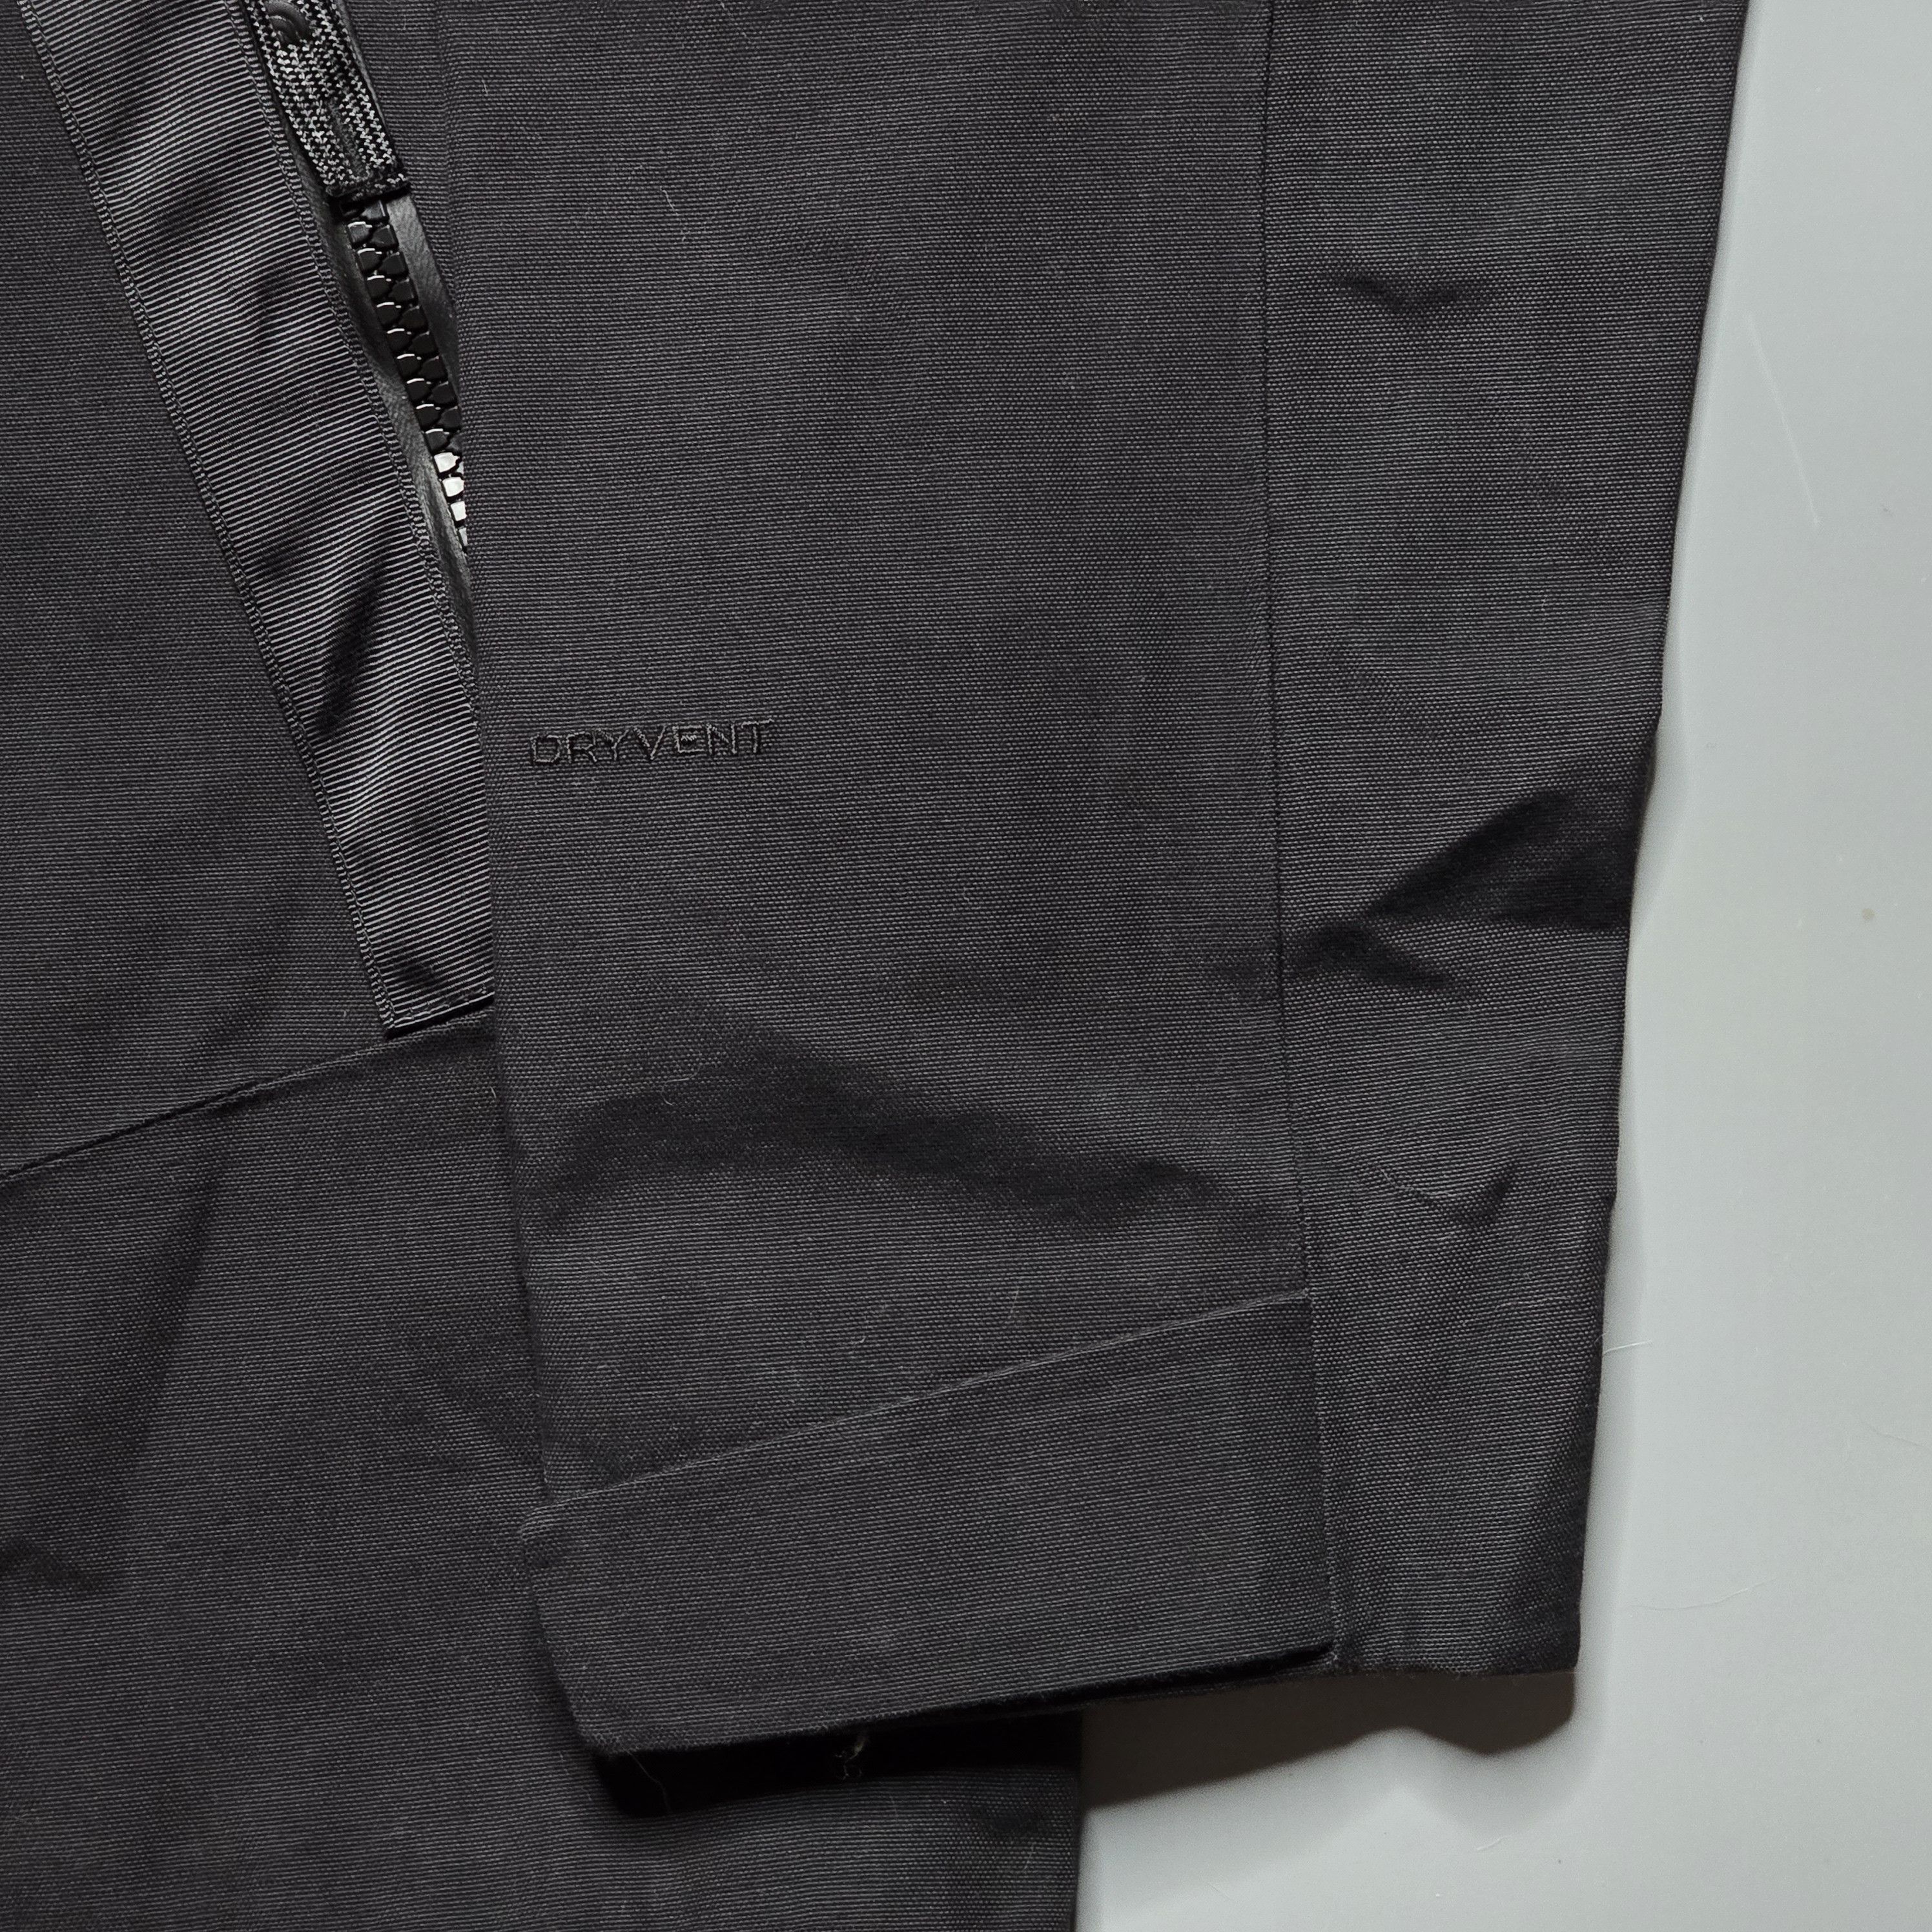 TNF Black Series - Urban Exploration Gear Pocket Tech Jacket - 7